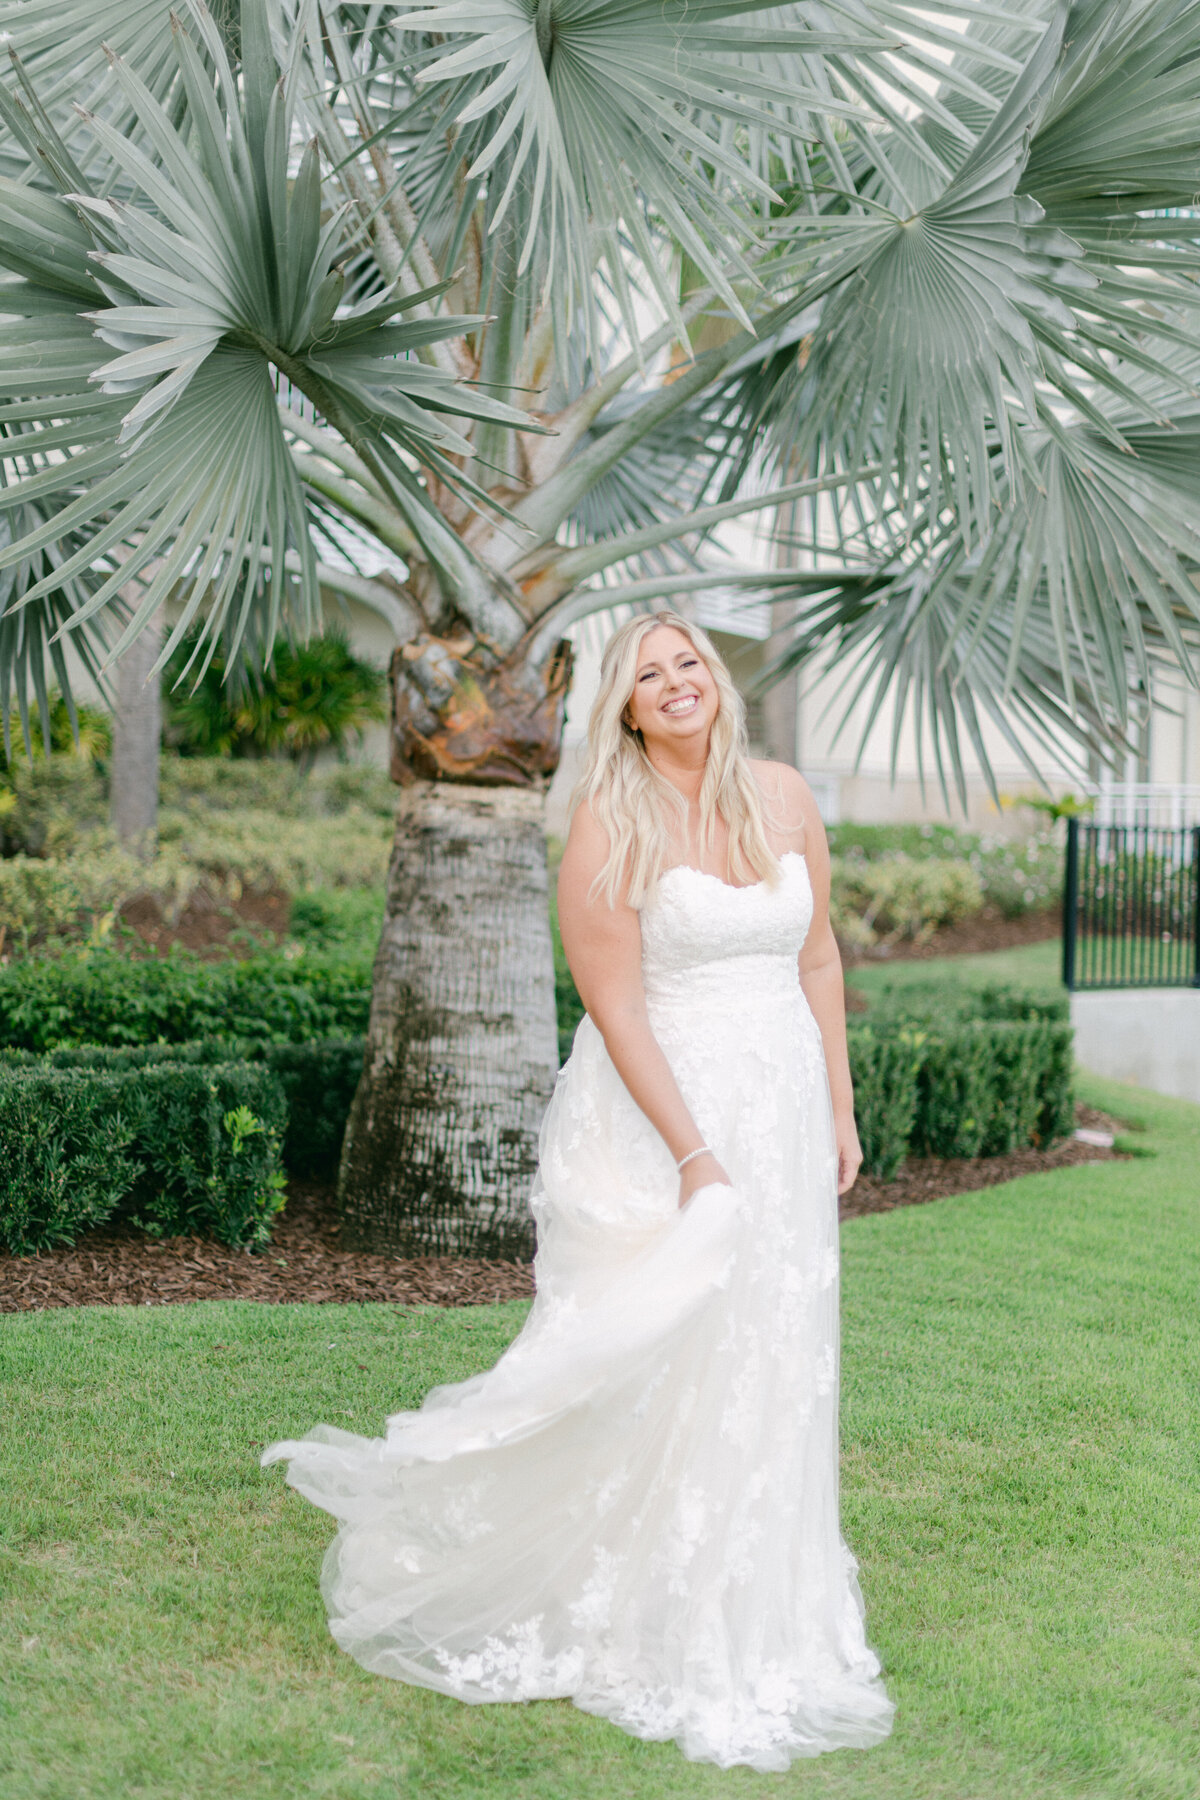 Kristen Weaver Photography Orlando Florida Destination Photographer Worldwide Wedding Editorial Fashion Inspired Clean Film Digital KWP Soft Classic 0422